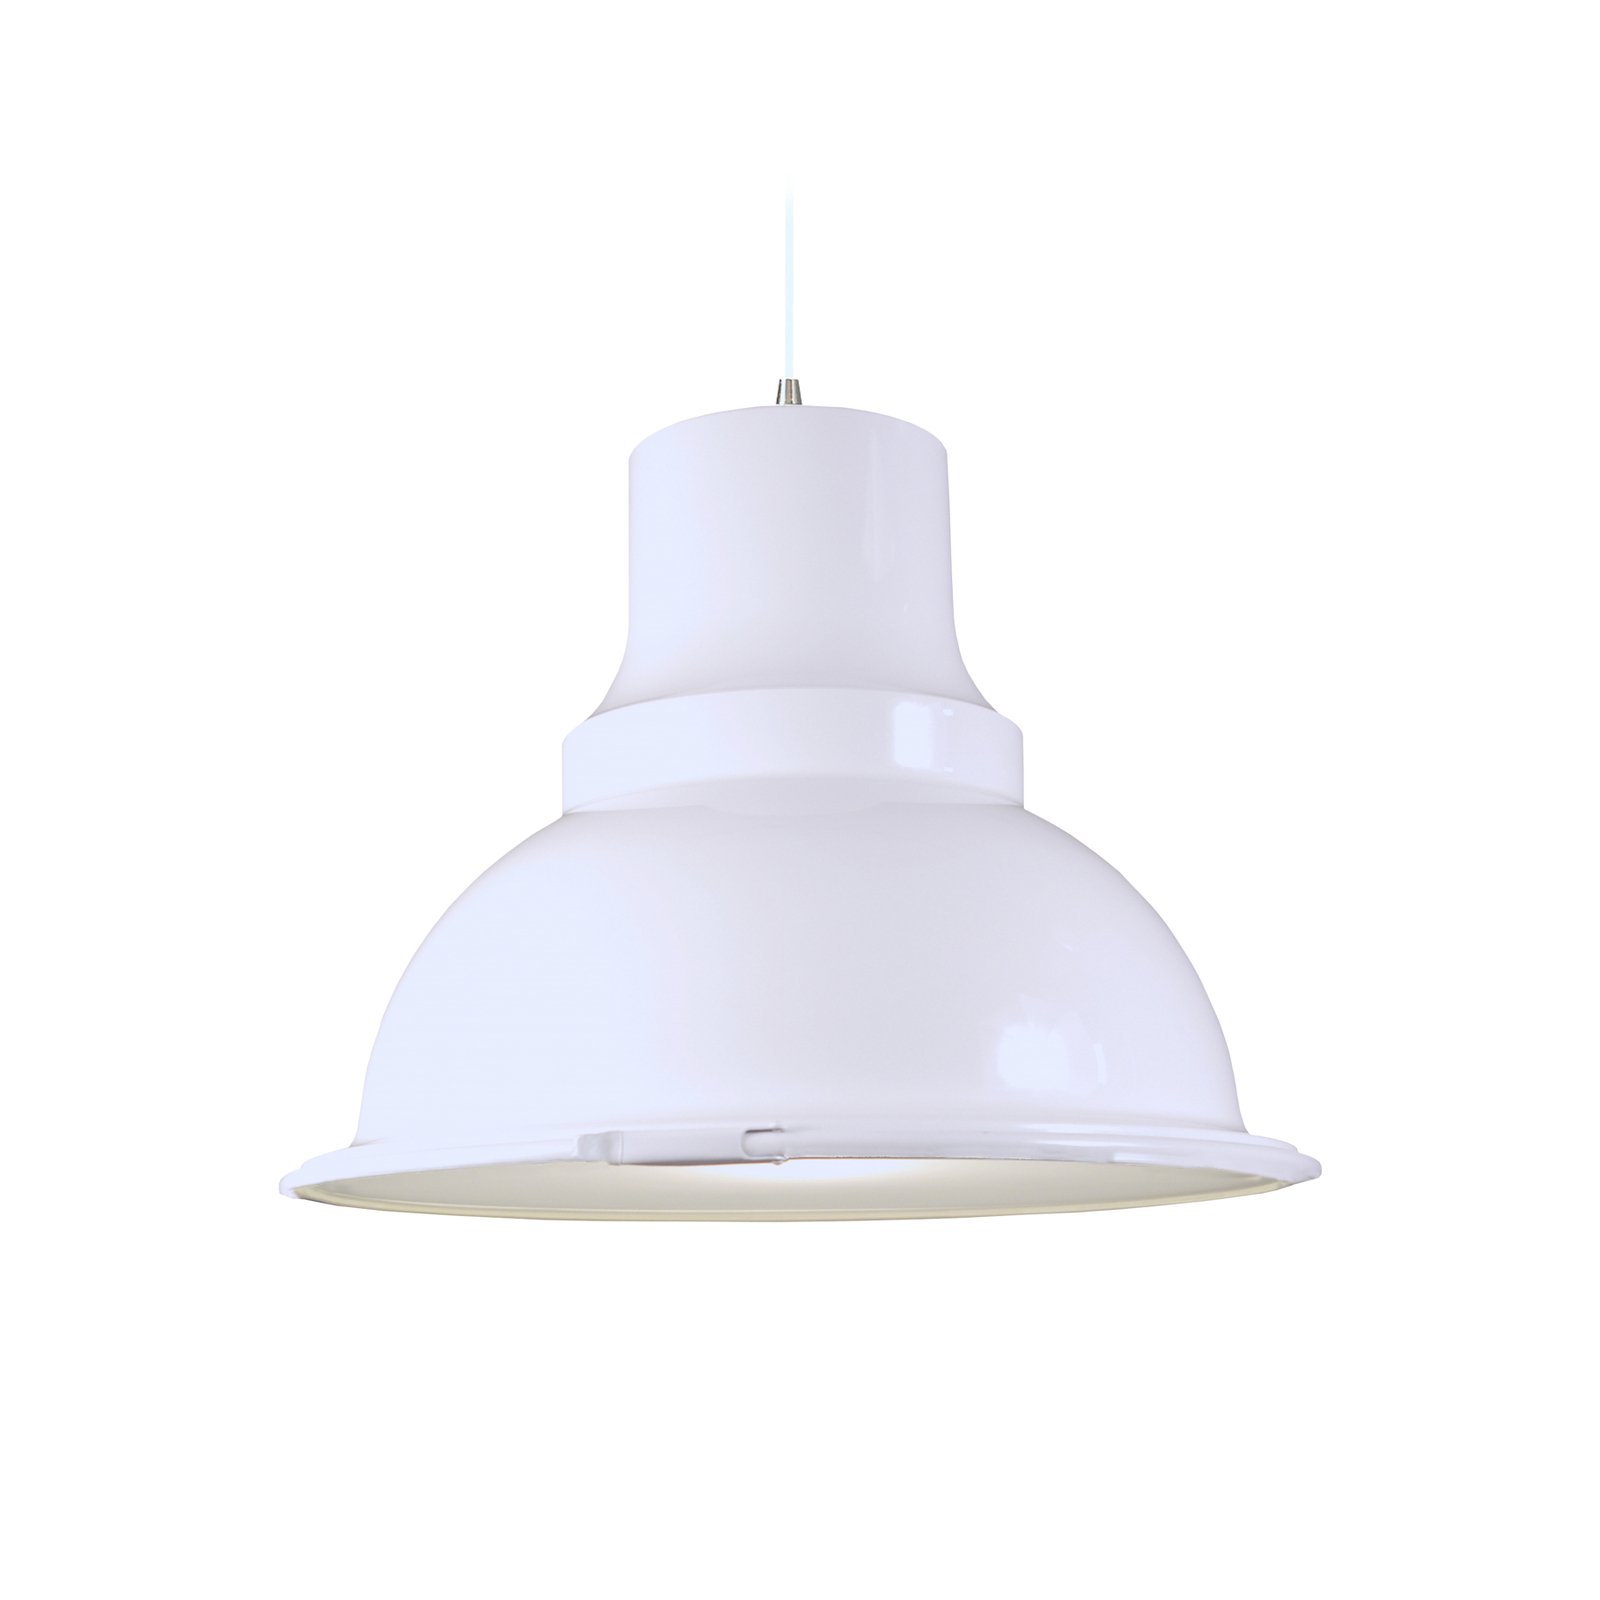 Aluminor Loft lampada sospensione, Ø 39 cm, bianco